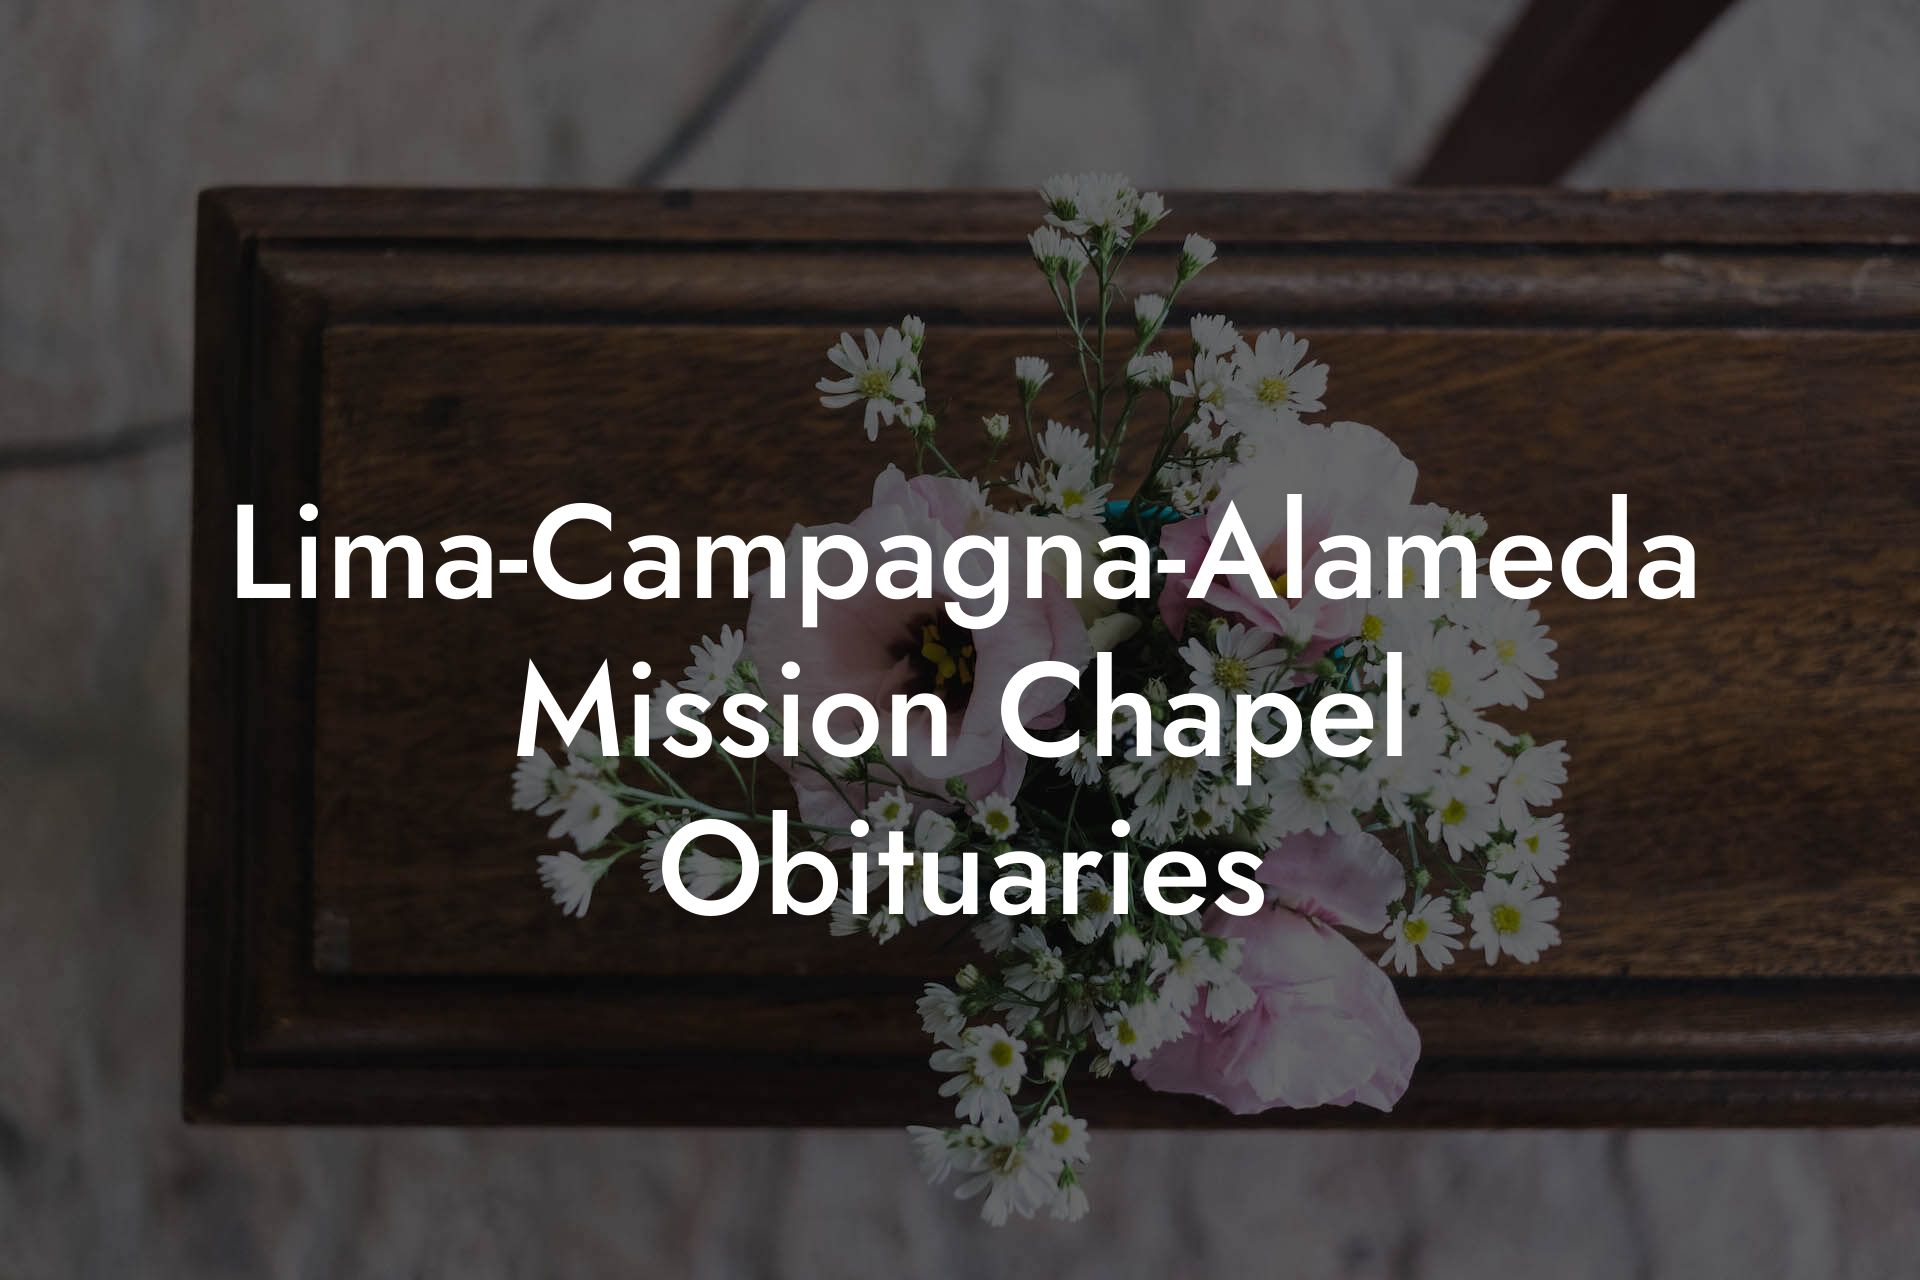 Lima-Campagna-Alameda Mission Chapel Obituaries